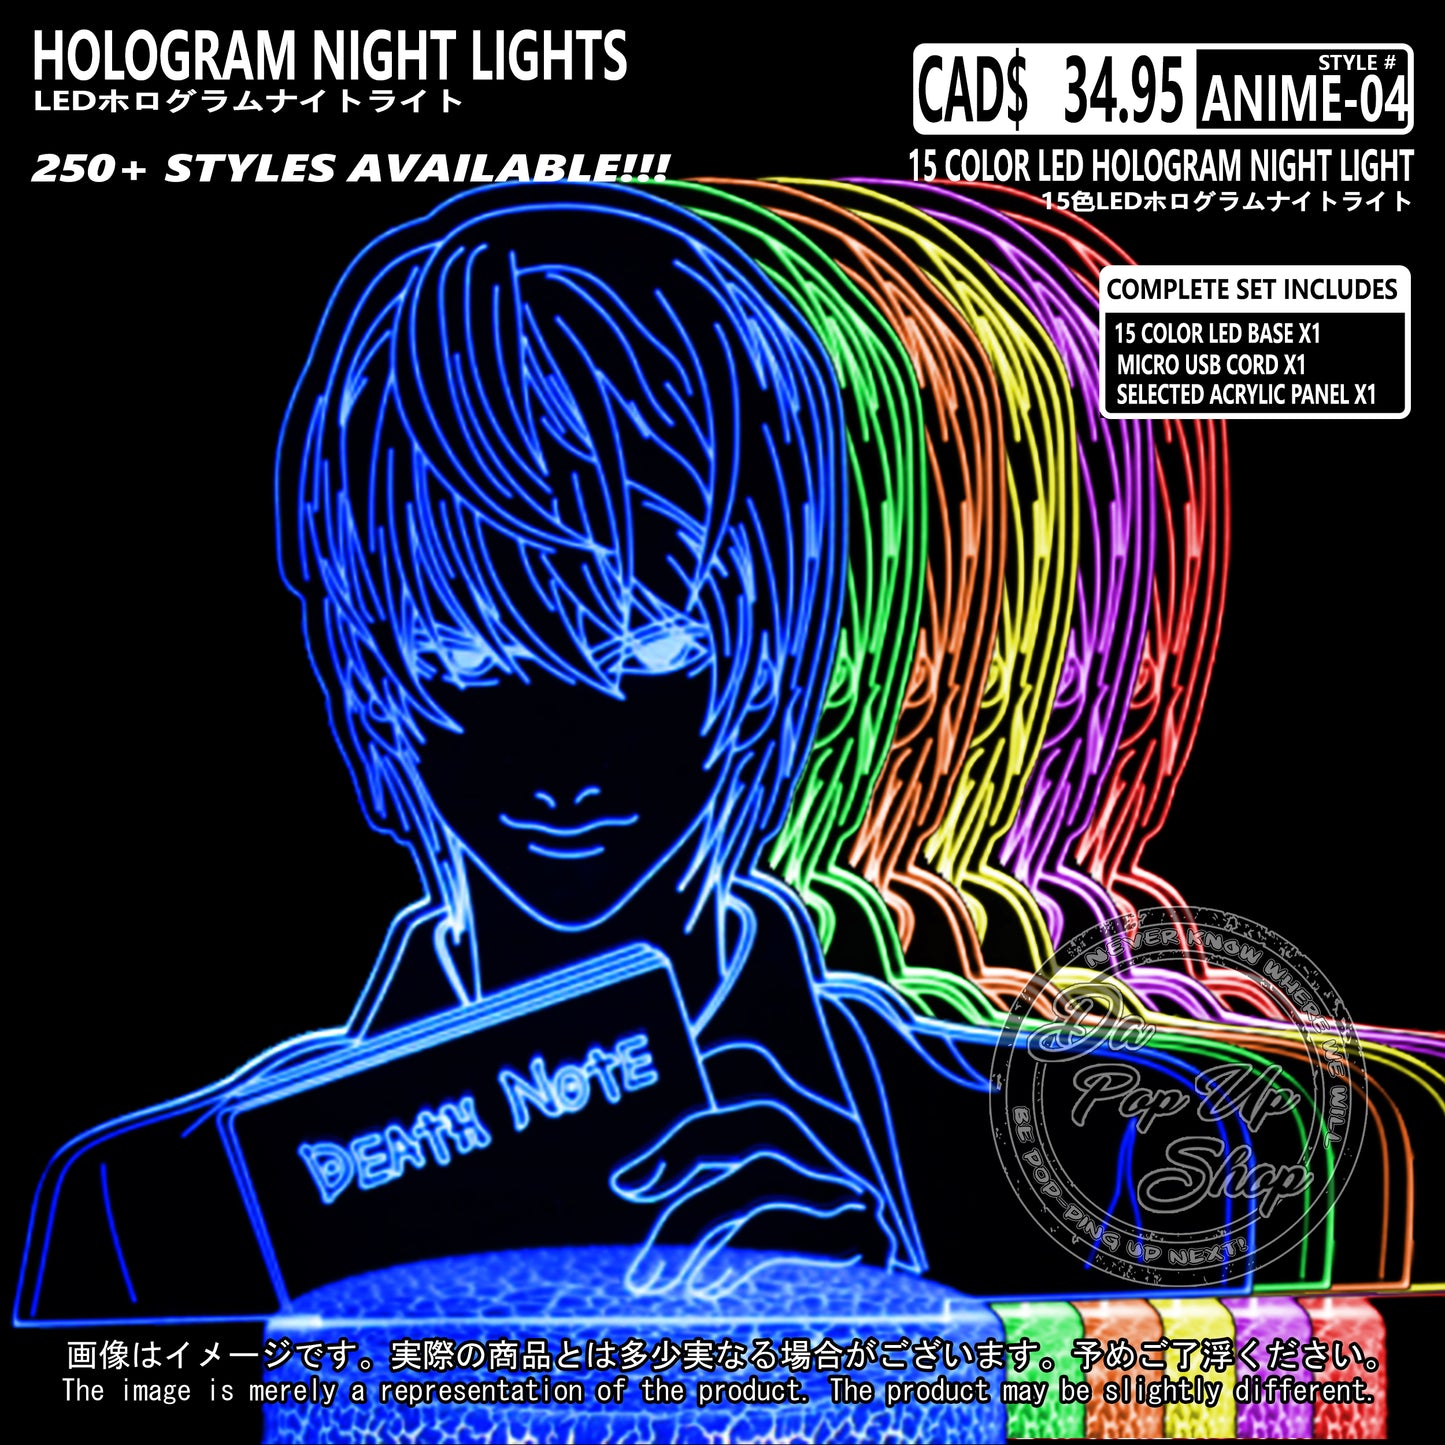 (ANIME-04) Death Note Hologram LED Night Light